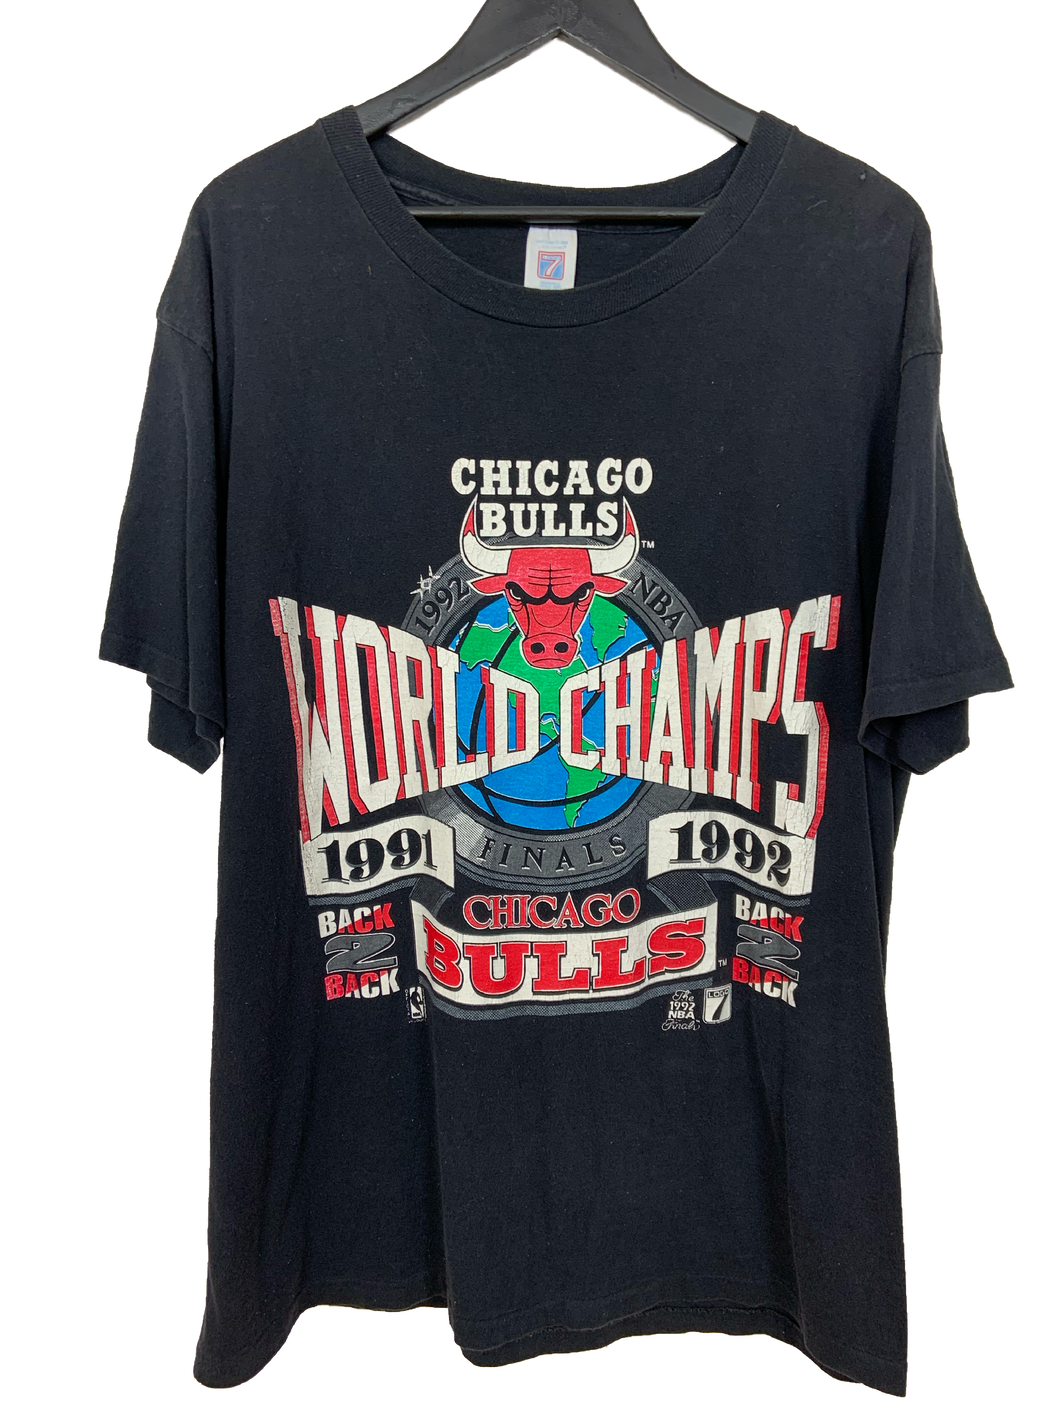 1992 CHICAGO BULLS WORLD CHAMPS 'SS' TEE - XL